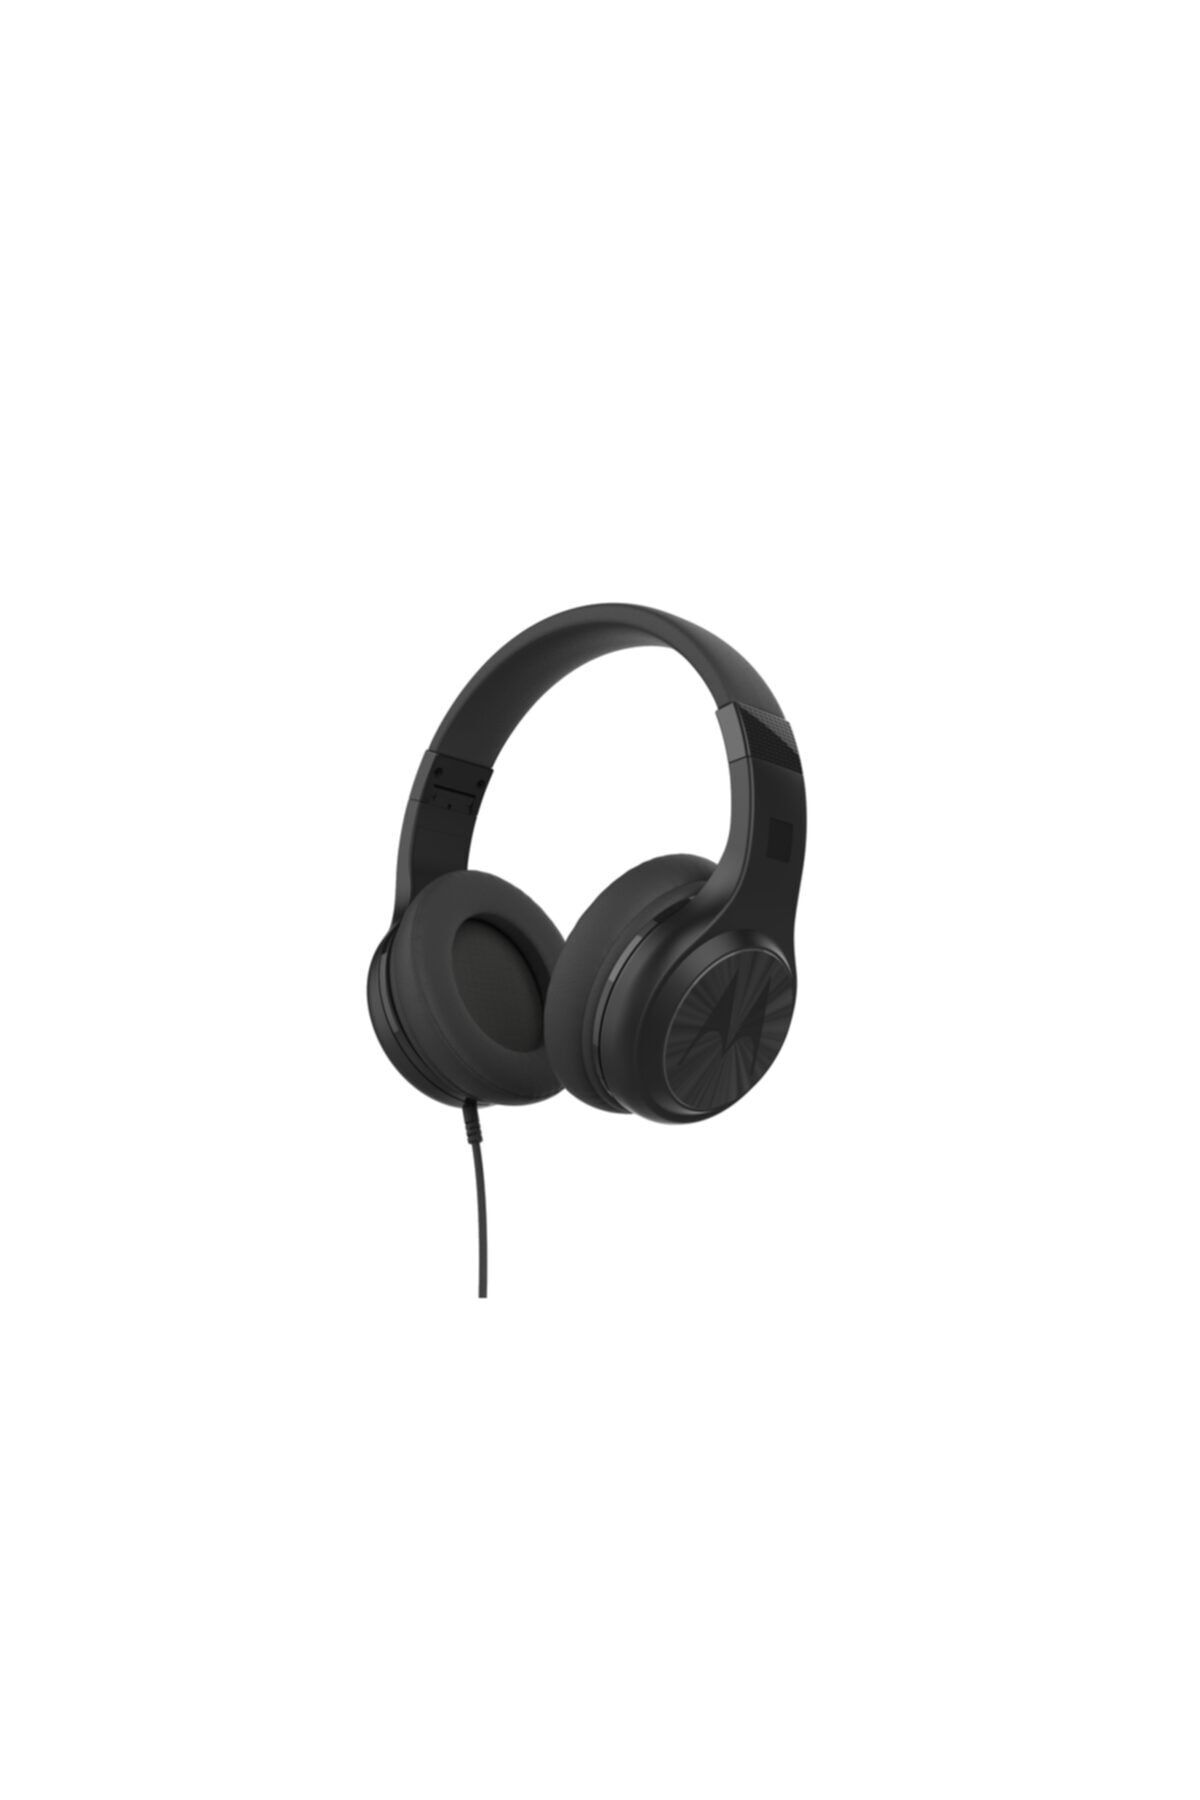 Motorola Pulse 120 Bass Kablolu Kulaküstü Kulaklık Siyah